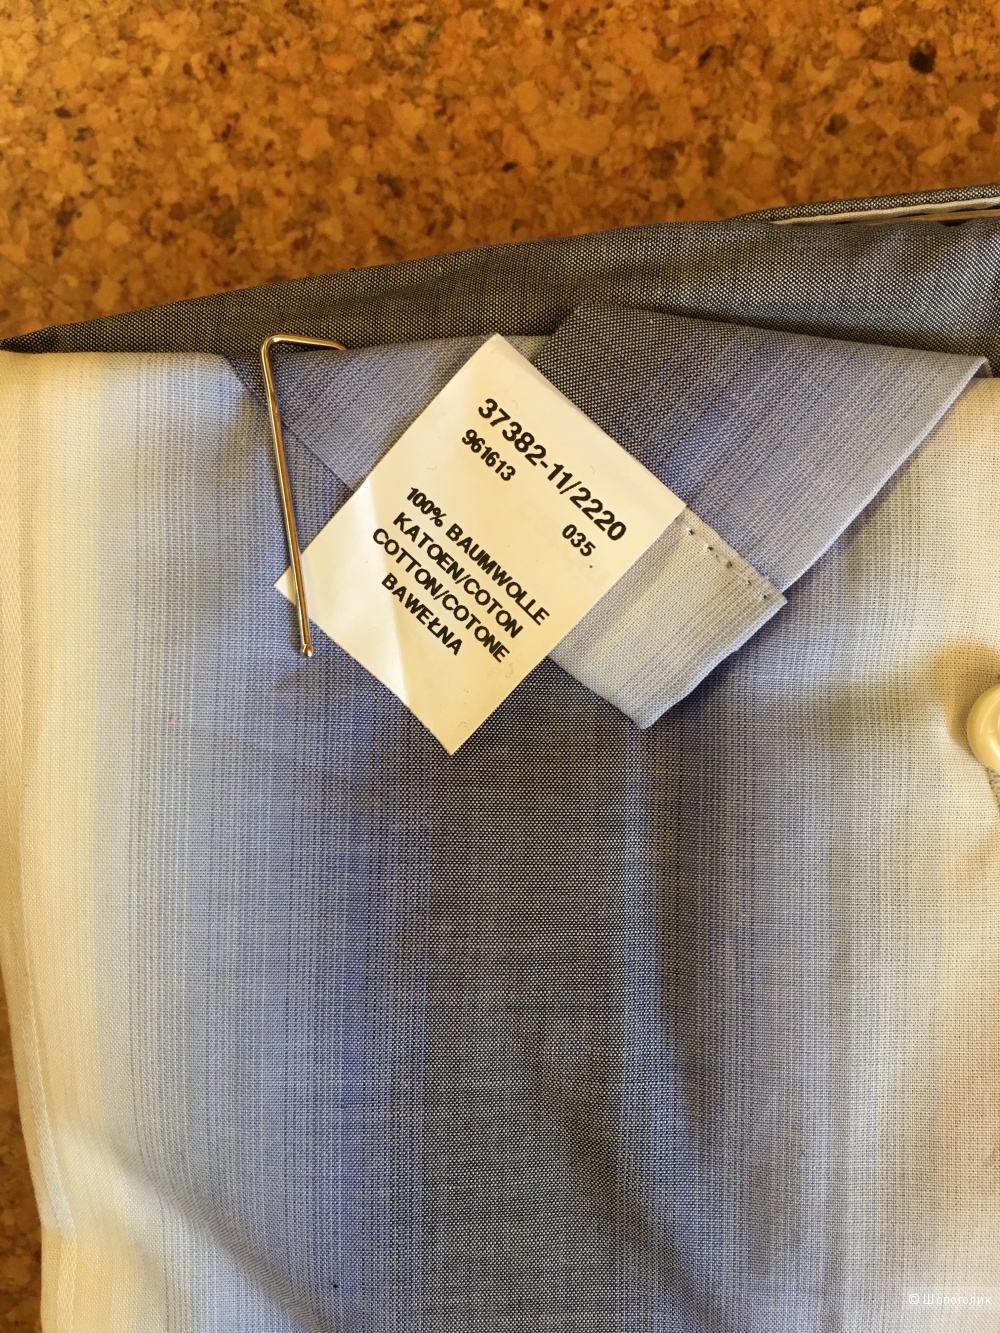 Pierre Cardin Новые рубашки мужские 2 штуки 41 размер по вороту Короткий рукав